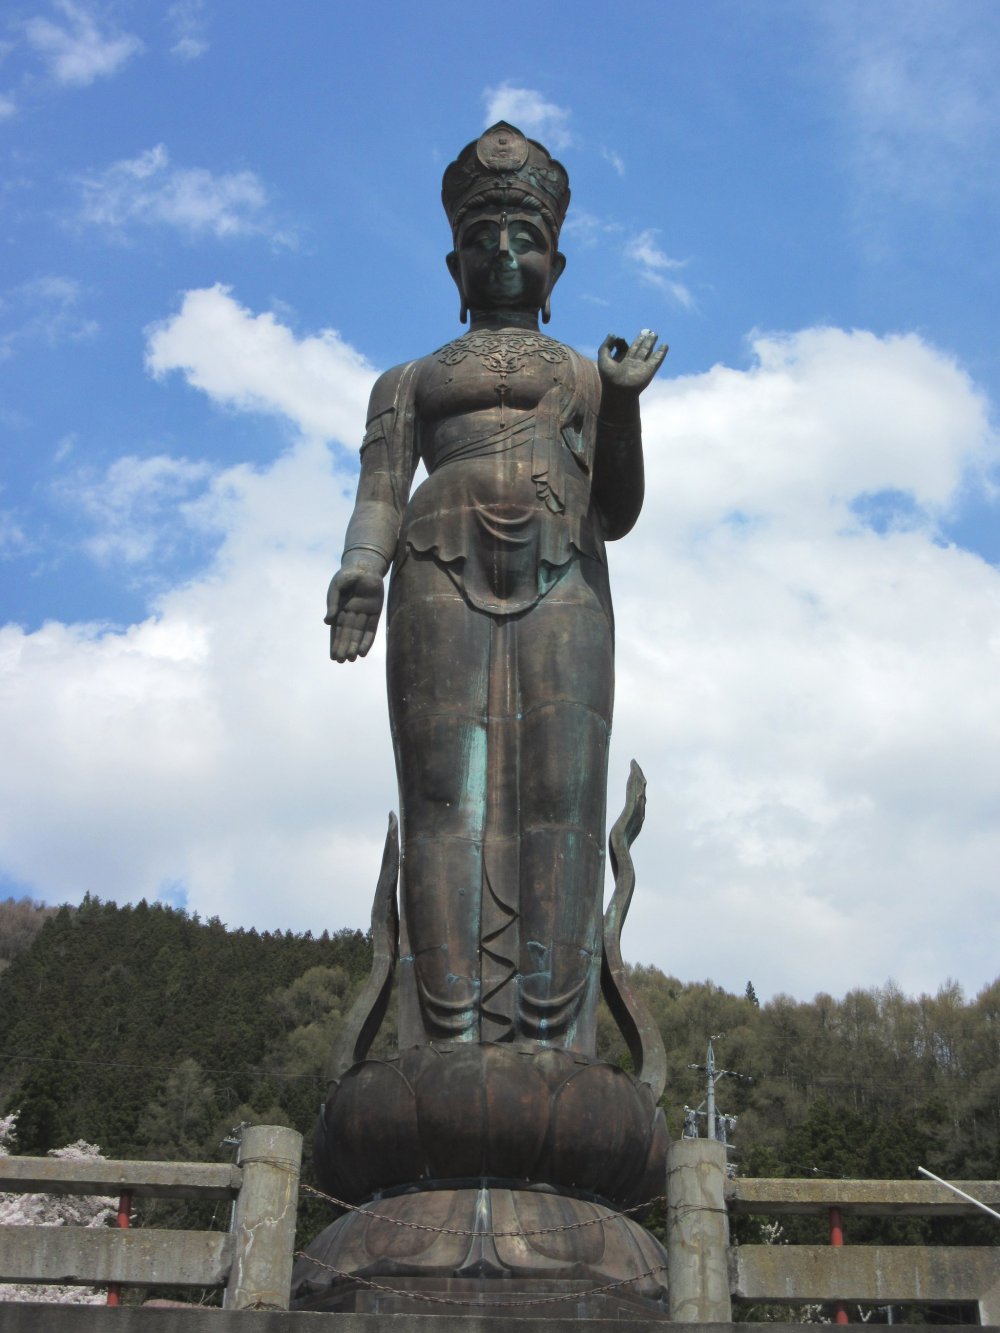 A bronze statue 25 metres tall